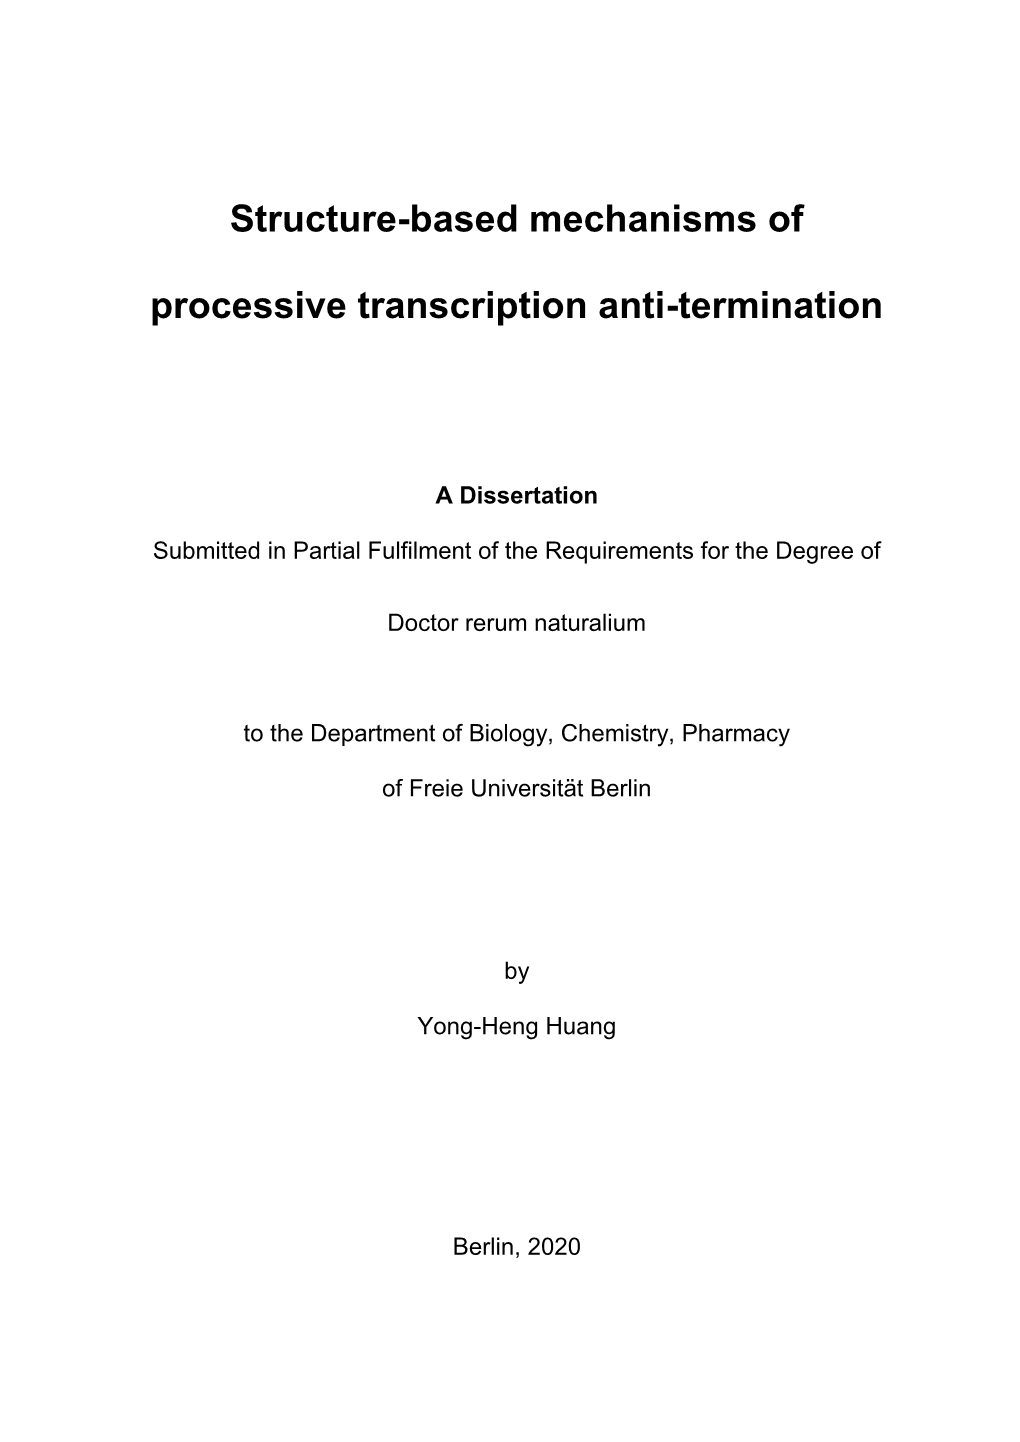 Structure-Based Mechanisms of Processive Transcription Anti-Termination